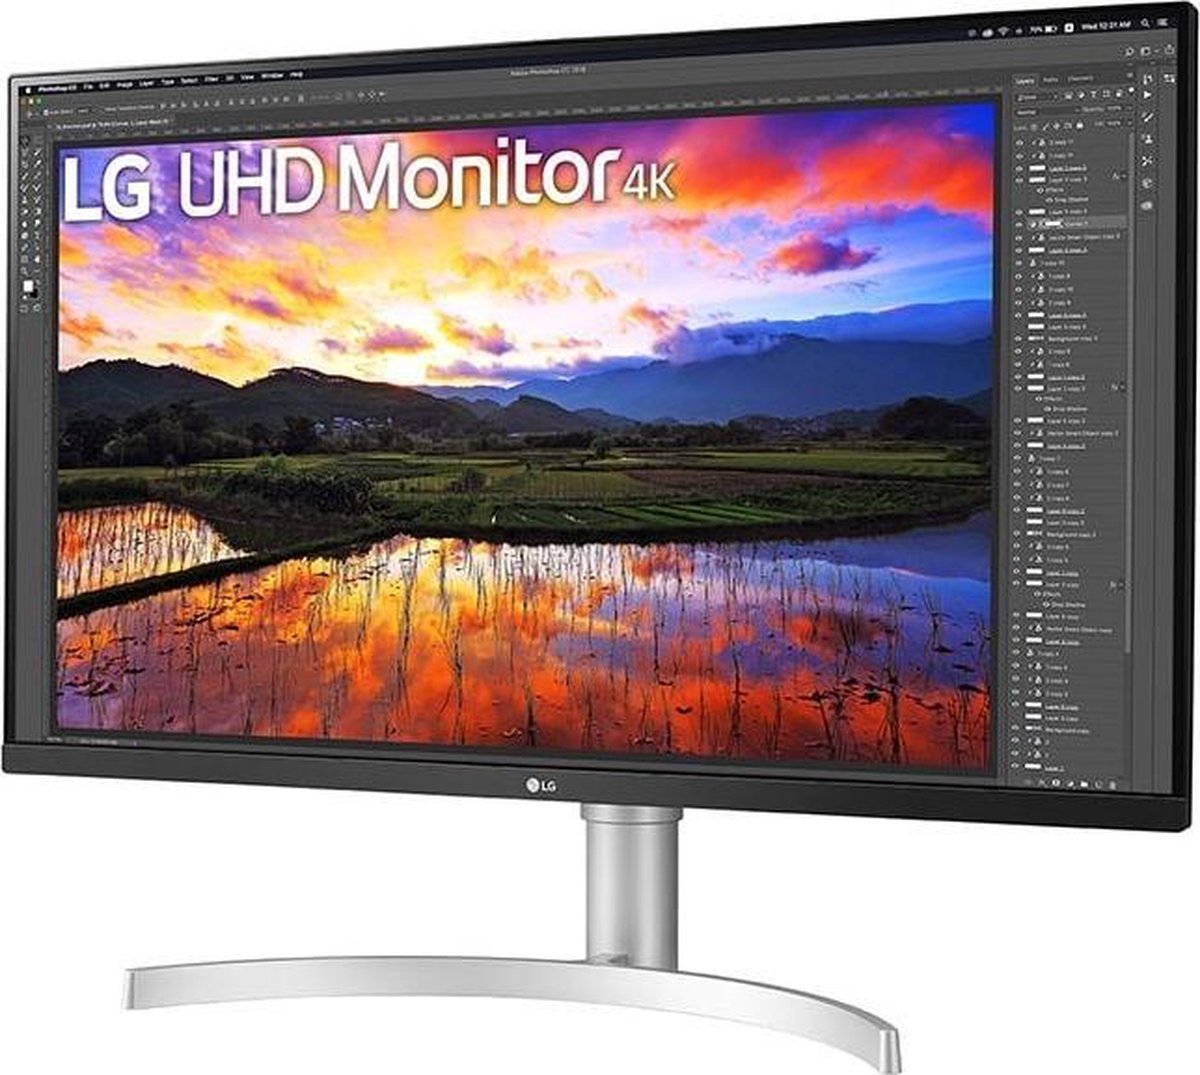 LG - 4K IPS Monitor - 32 bol.com